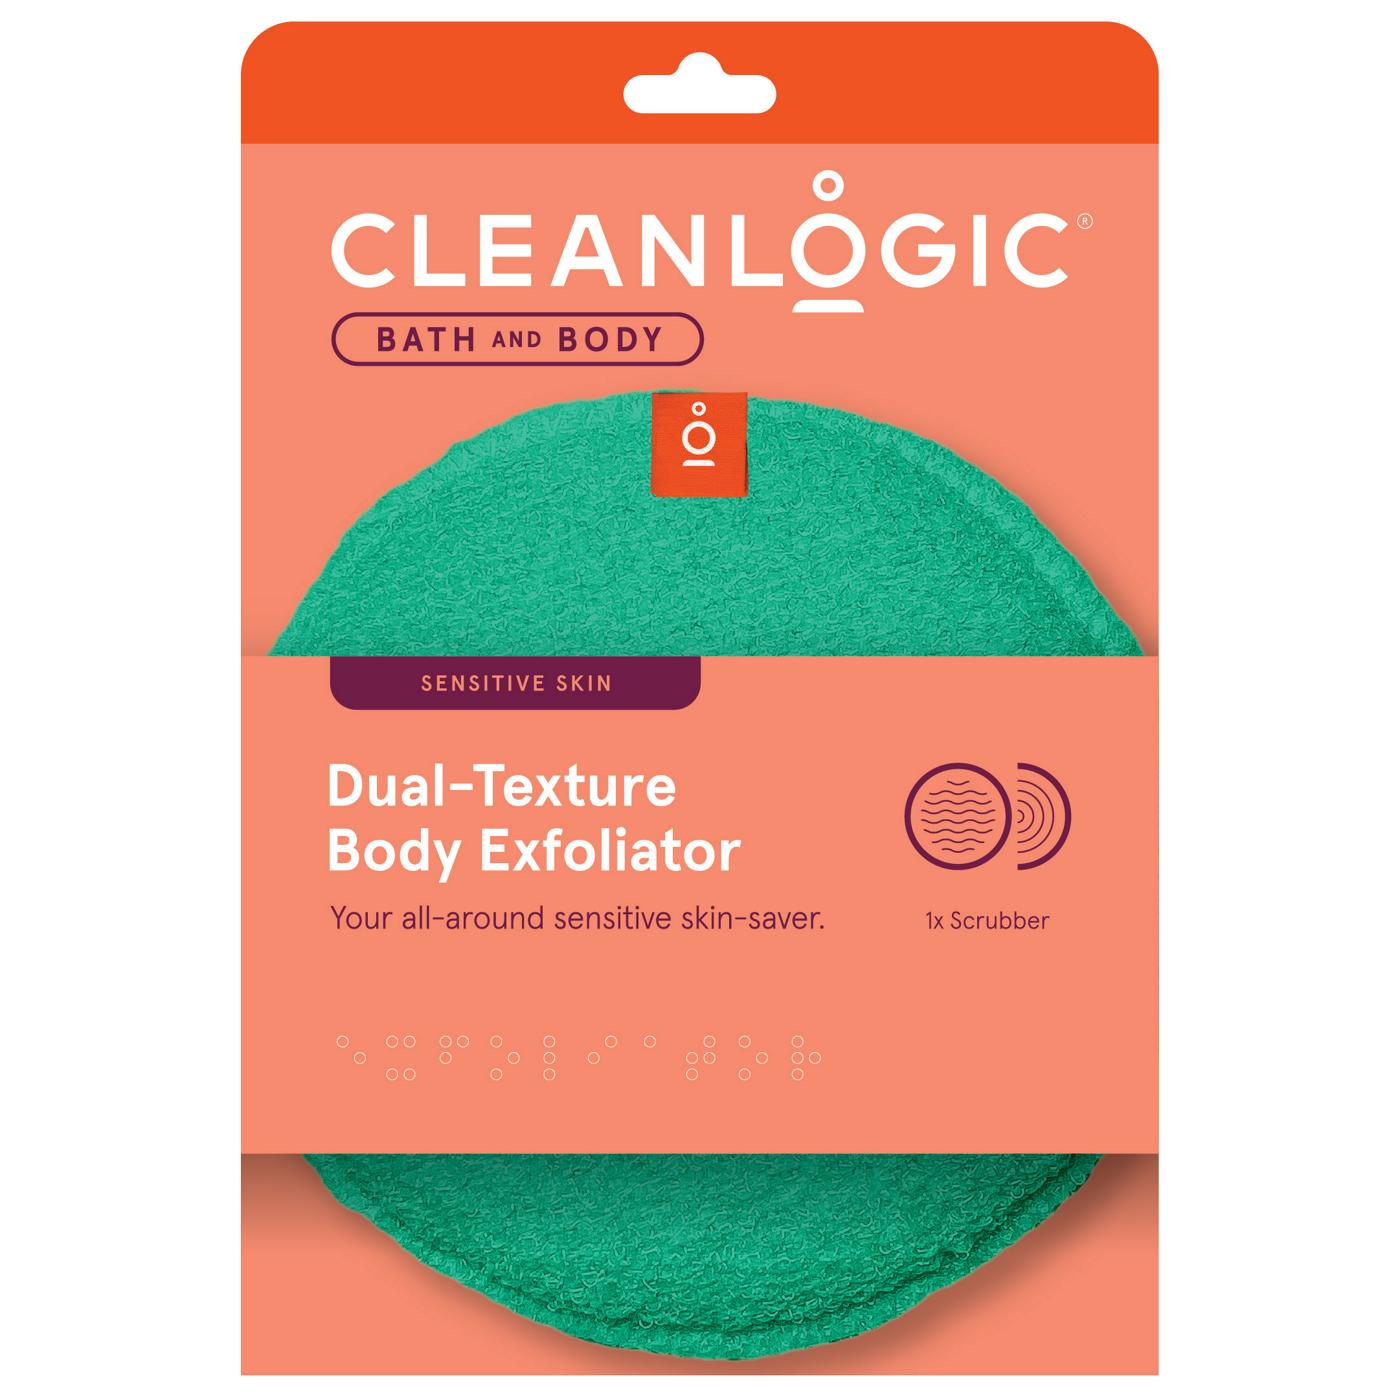 Cleanlogic Dual-Texture Body Exfoliator; image 1 of 2